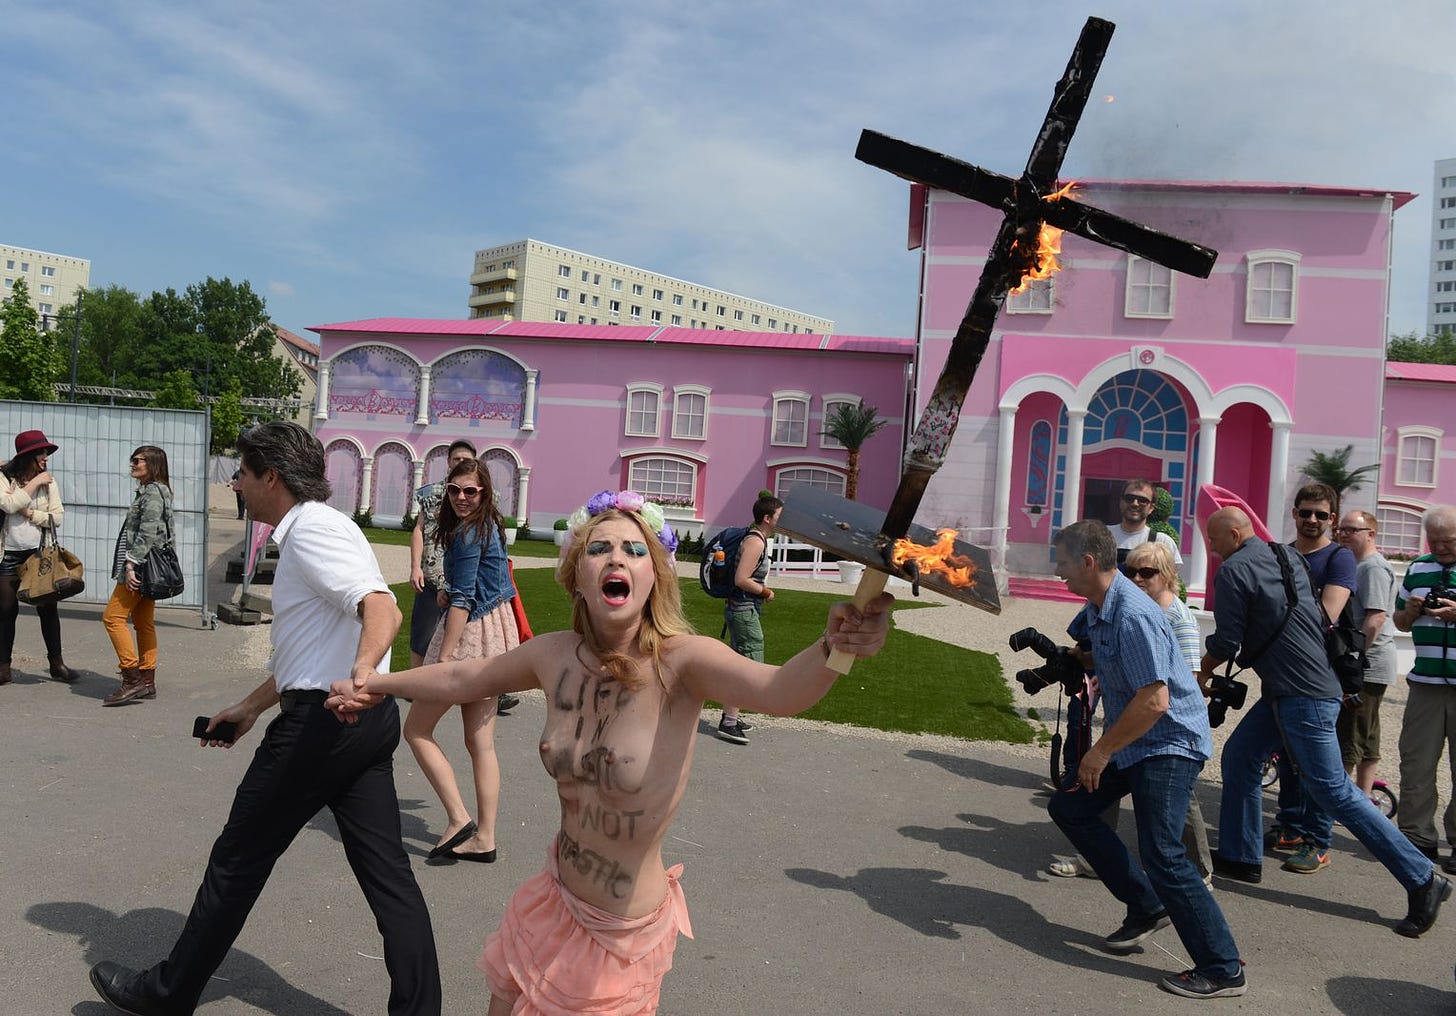 Protests Mar Opening of Barbie Dreamhouse in Berlin - DER SPIEGEL